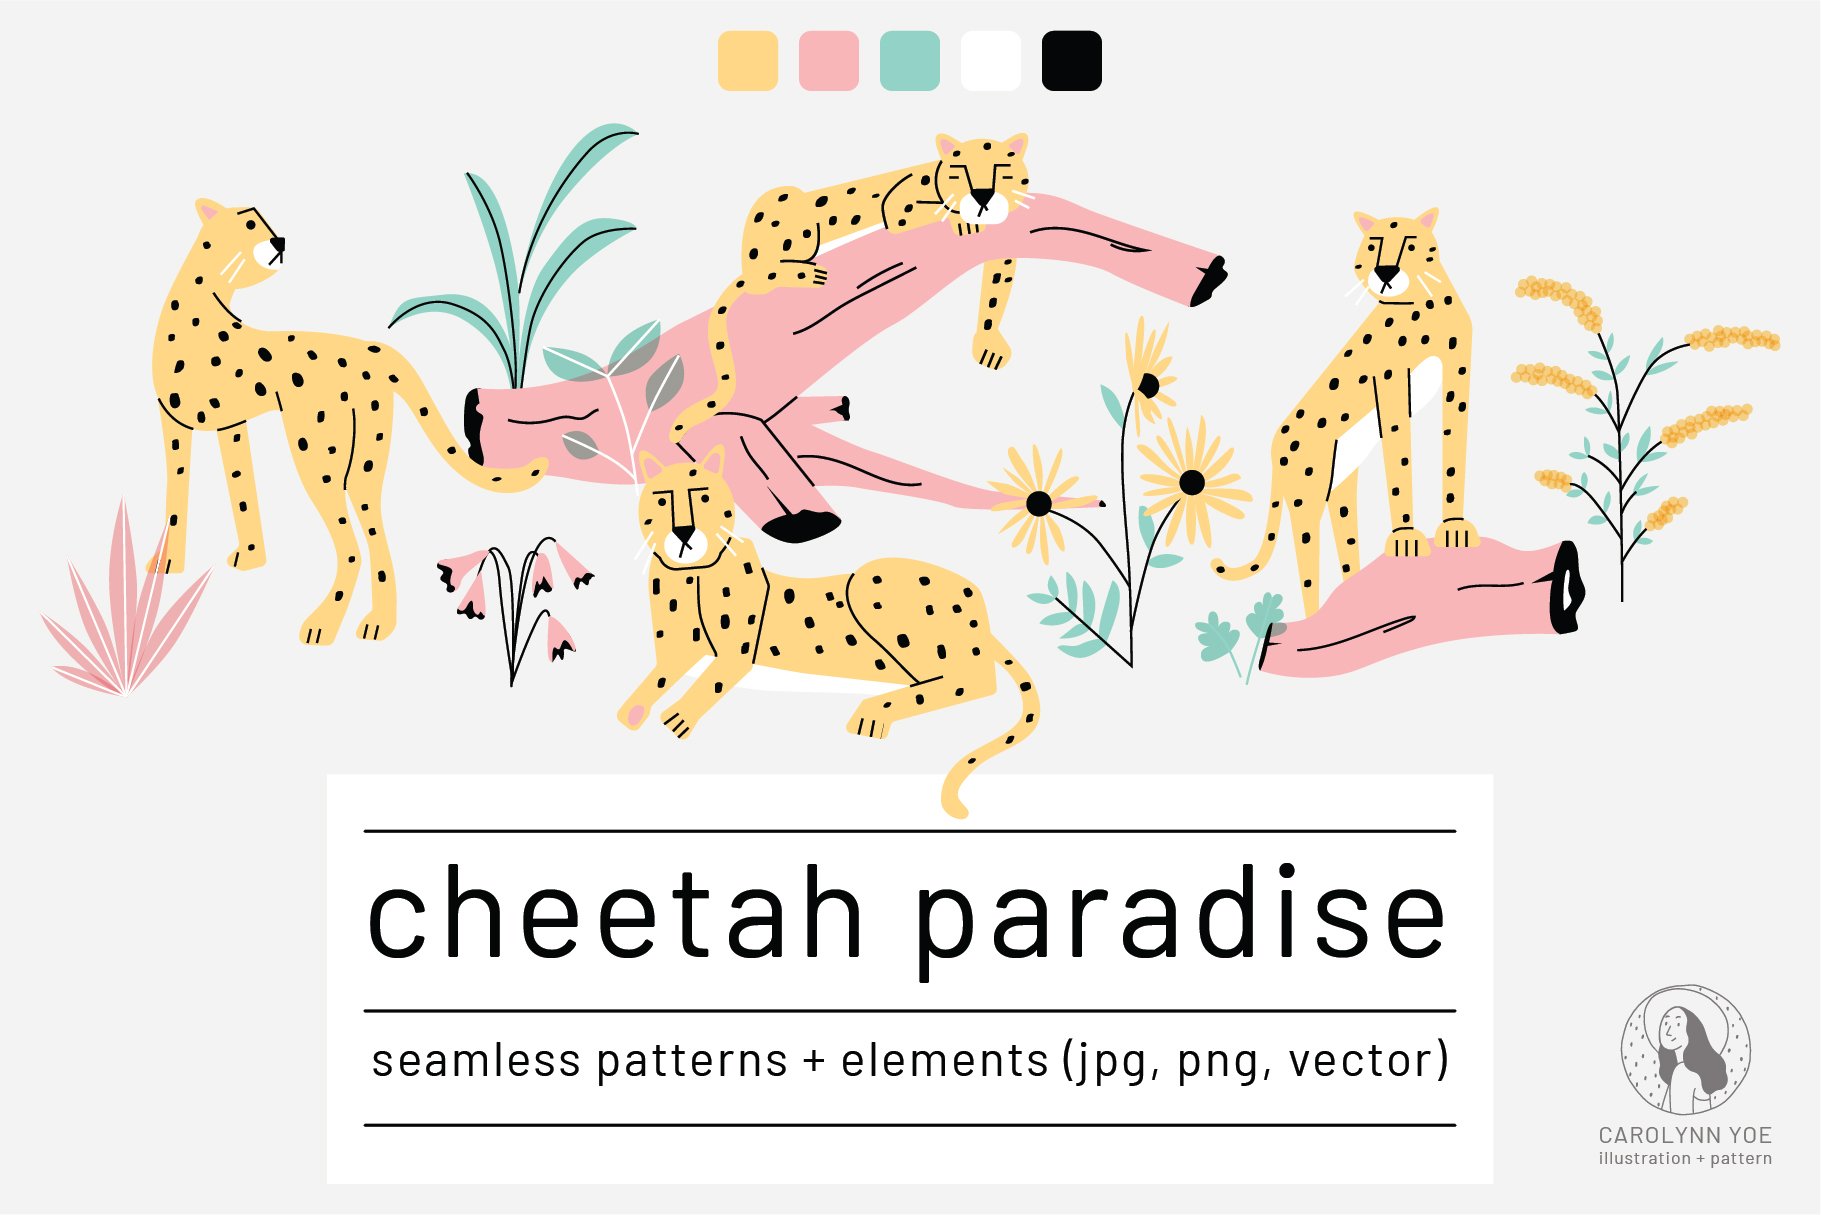 Colorful cheetah paradise illustration.